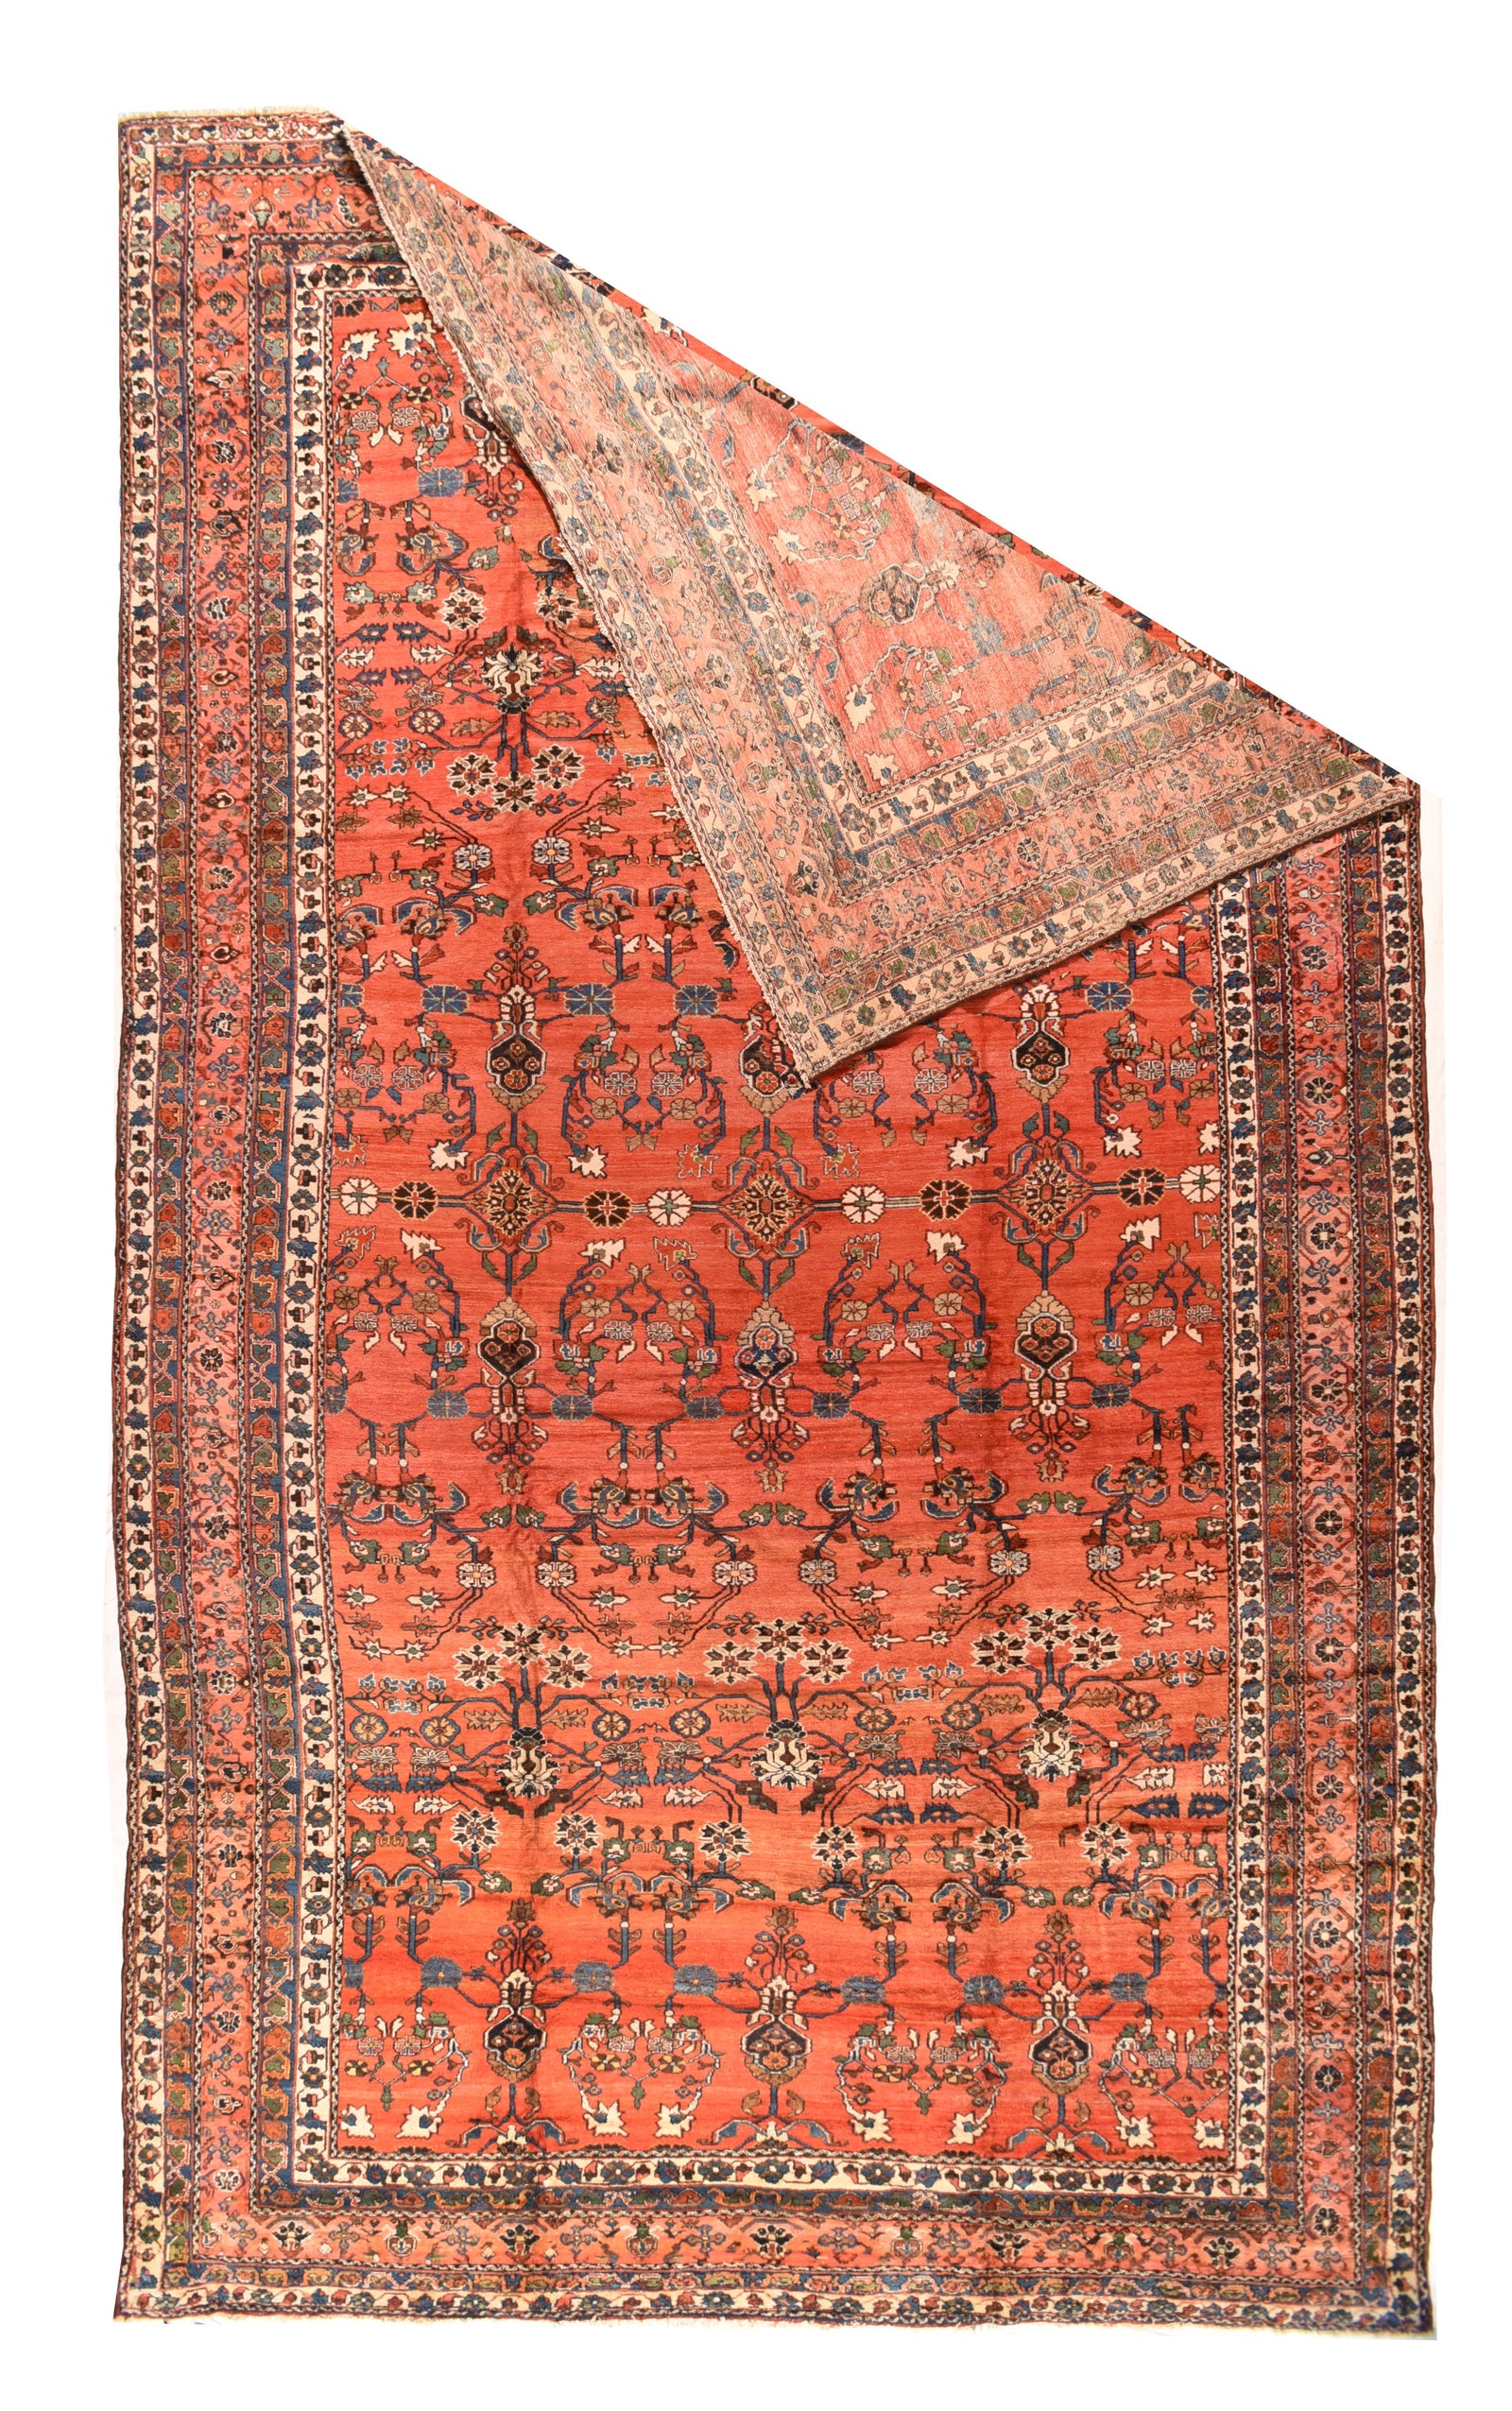 Antique Persian Lilihan Area Rug